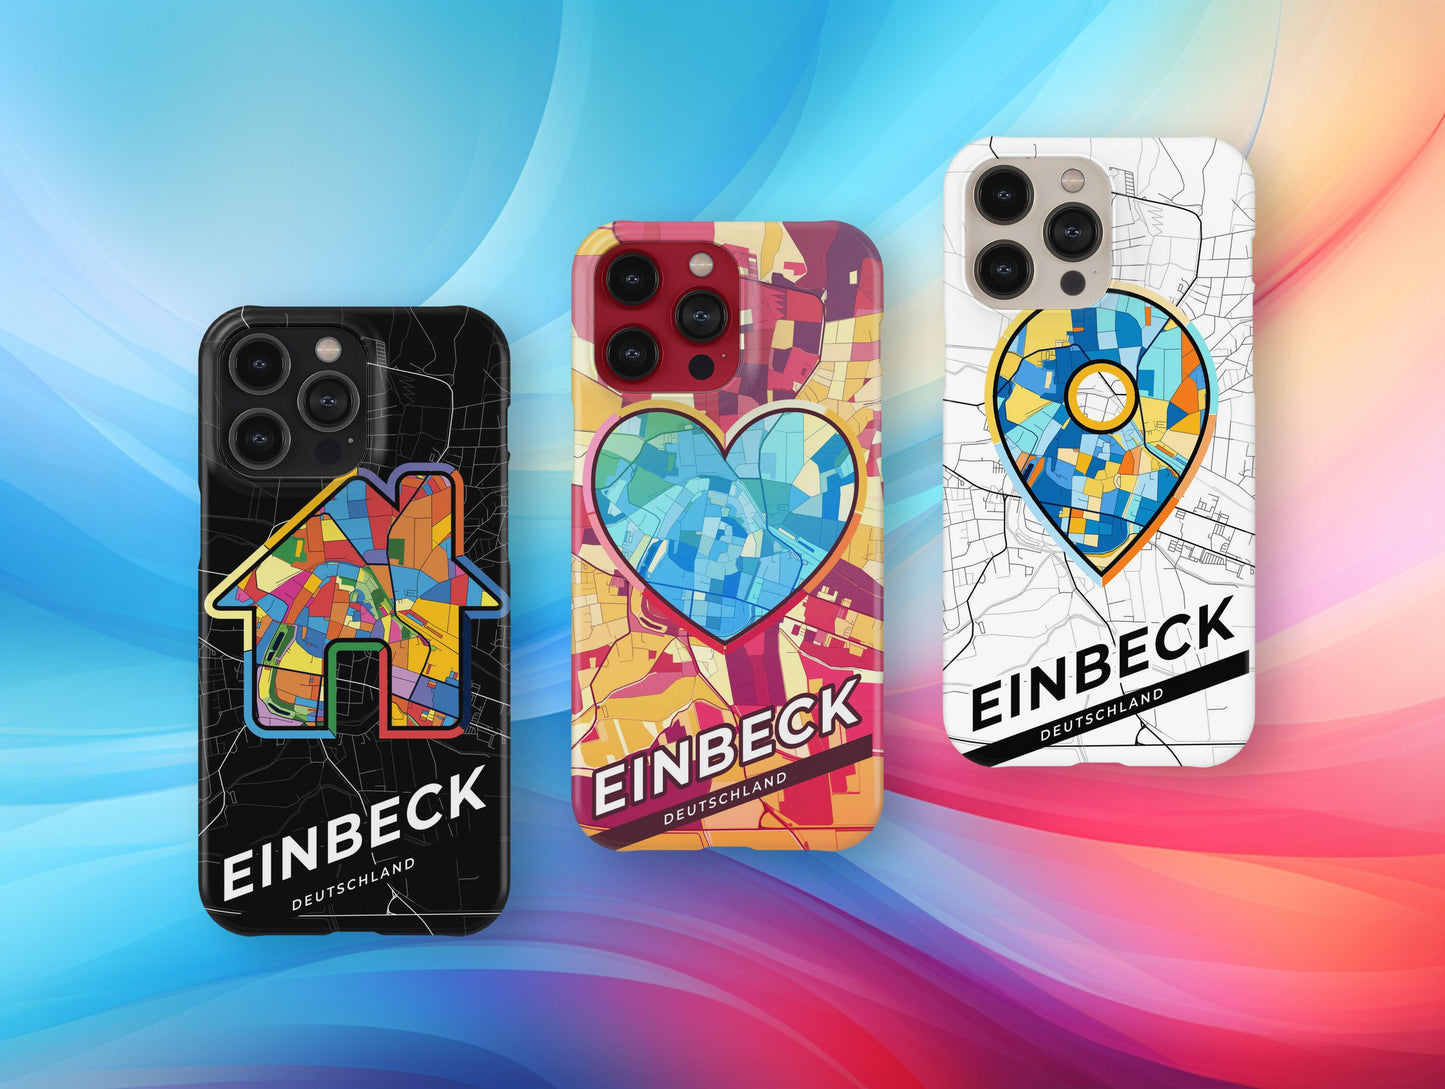 Einbeck Deutschland slim phone case with colorful icon. Birthday, wedding or housewarming gift. Couple match cases.